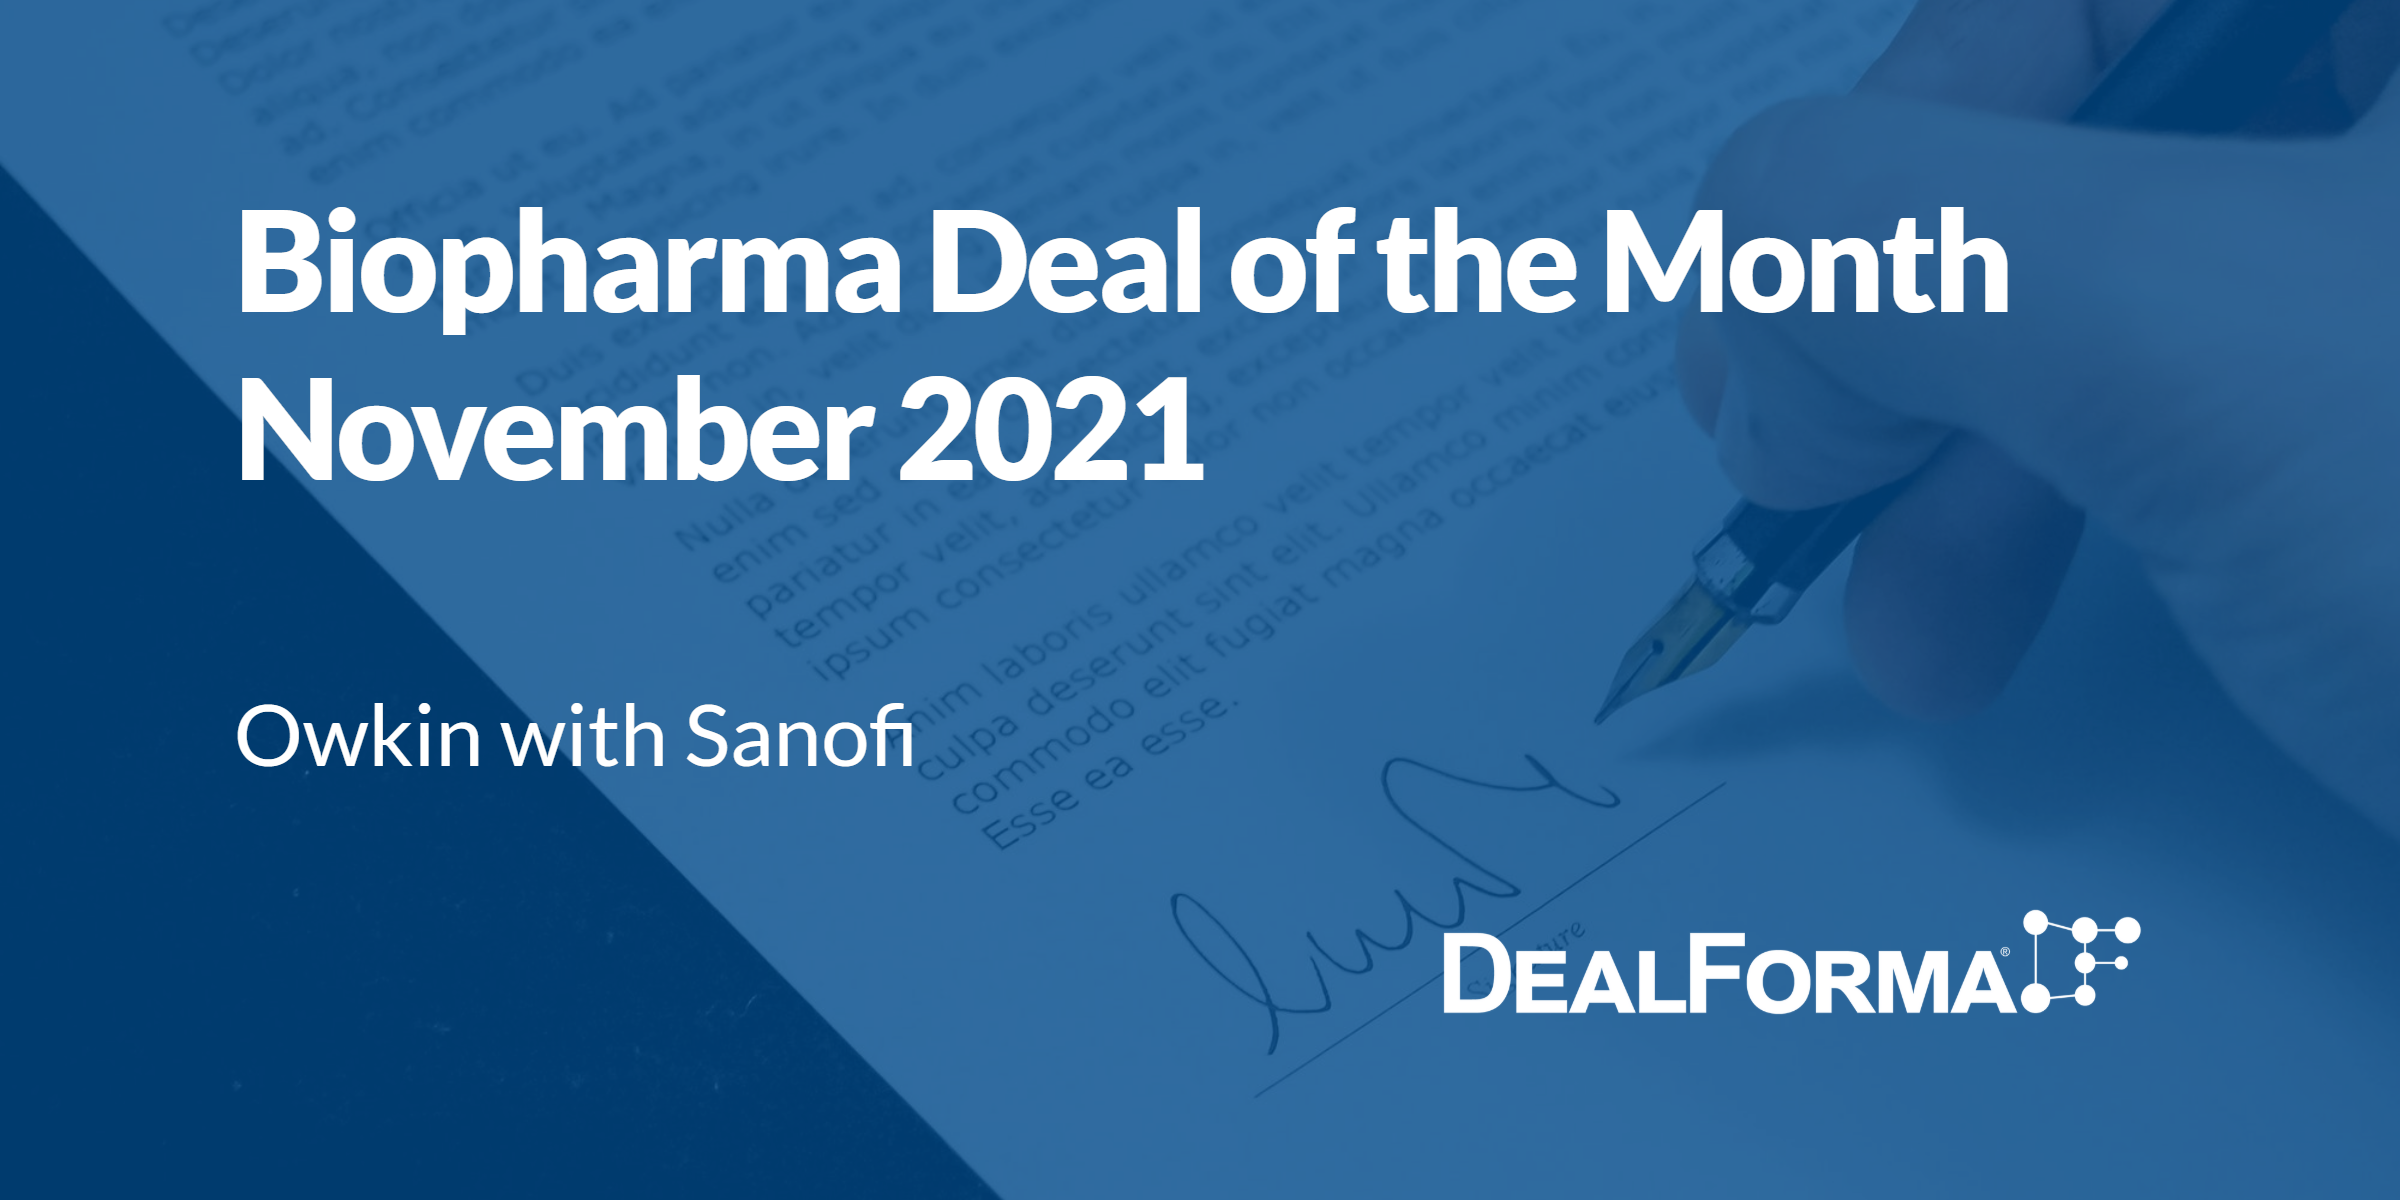 Top biopharma deal upfront November 2021